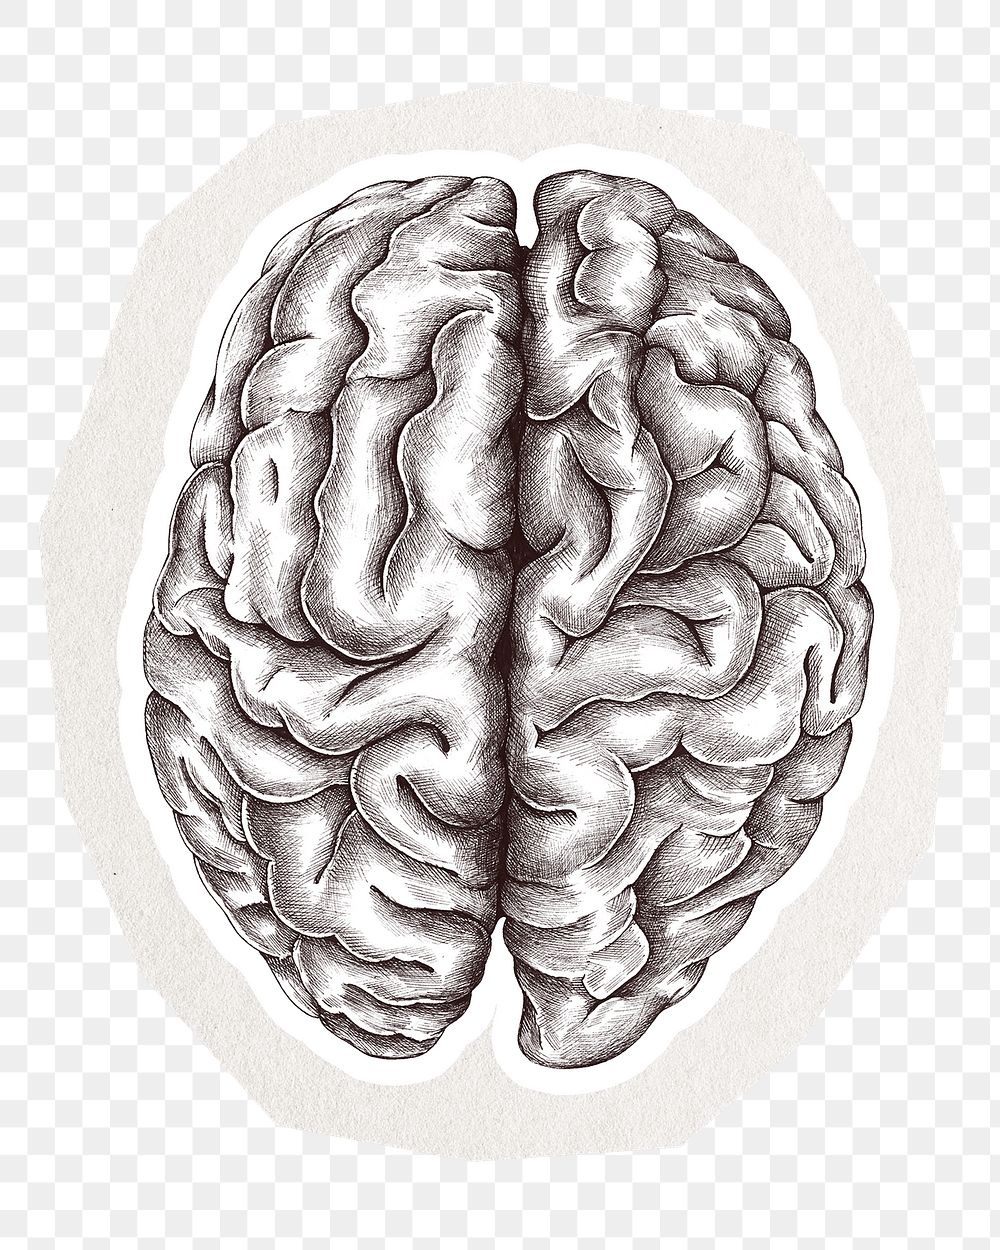 Brain illustration png sticker, collage element in transparent background